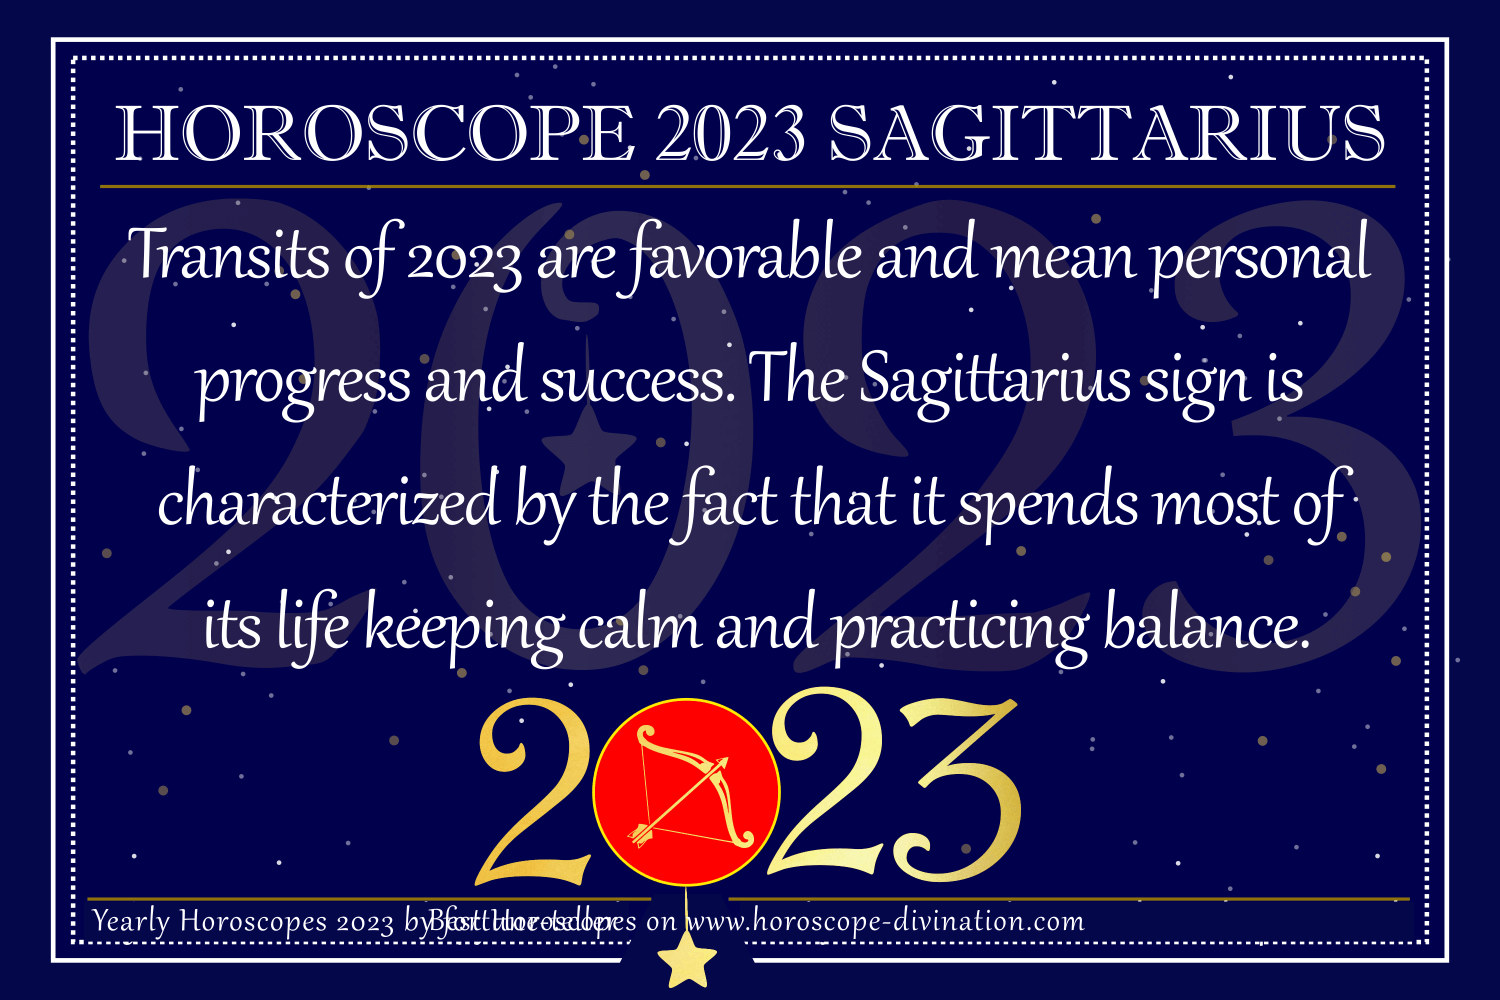 Horoscope 2023 Sagittarius - Yearly Forecast & Future